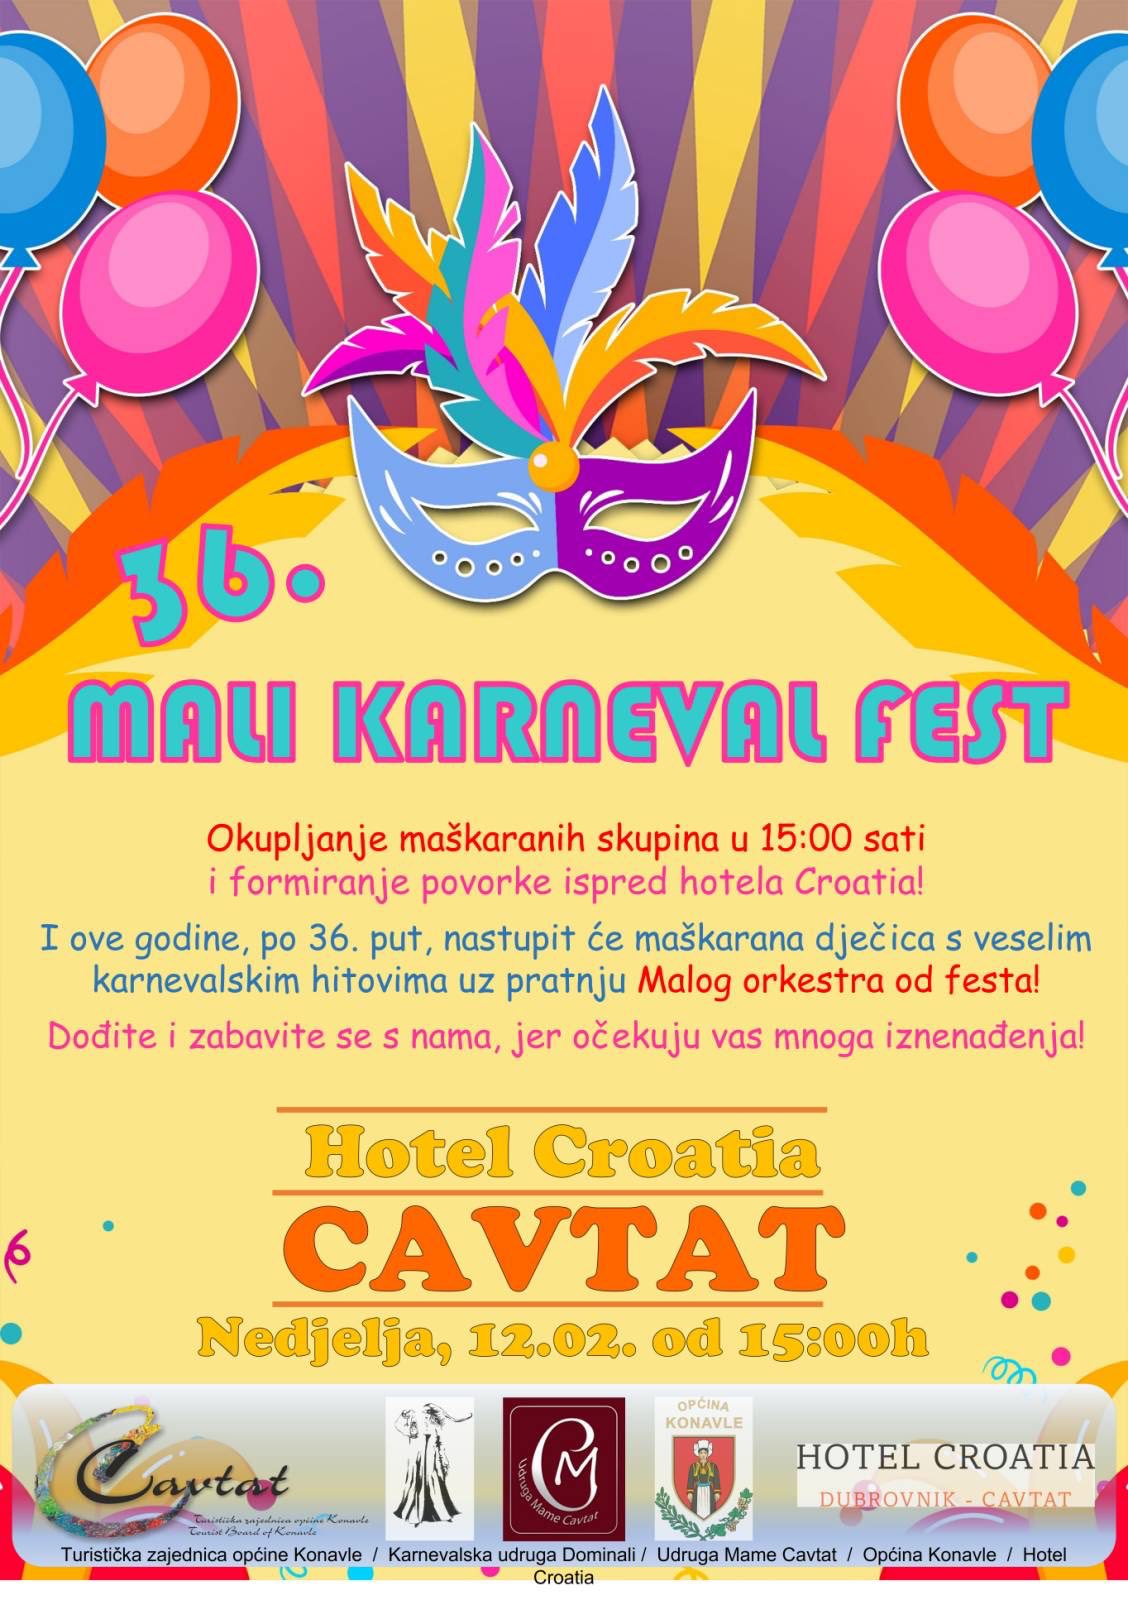 36. Mali karneval fest u Cavtatu